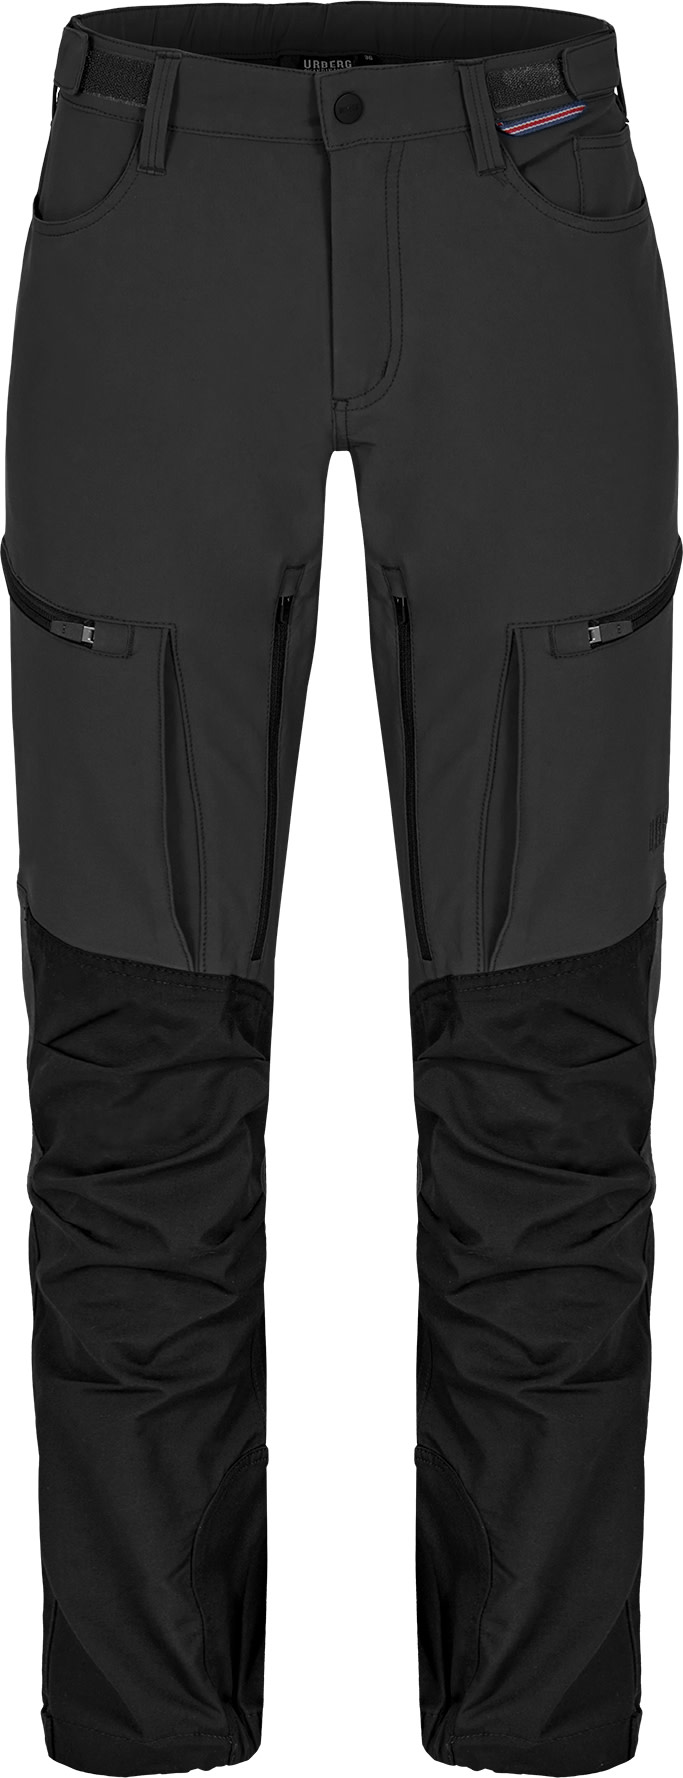 Buy Jessie Kidden Mens Waterproof Hiking Pants, Outdoor Snow Ski Fishing  Fleece Lined Insulated Soft Shell Winter Pants (6070 Grey,42), Grey, 42 at  Amazon.in